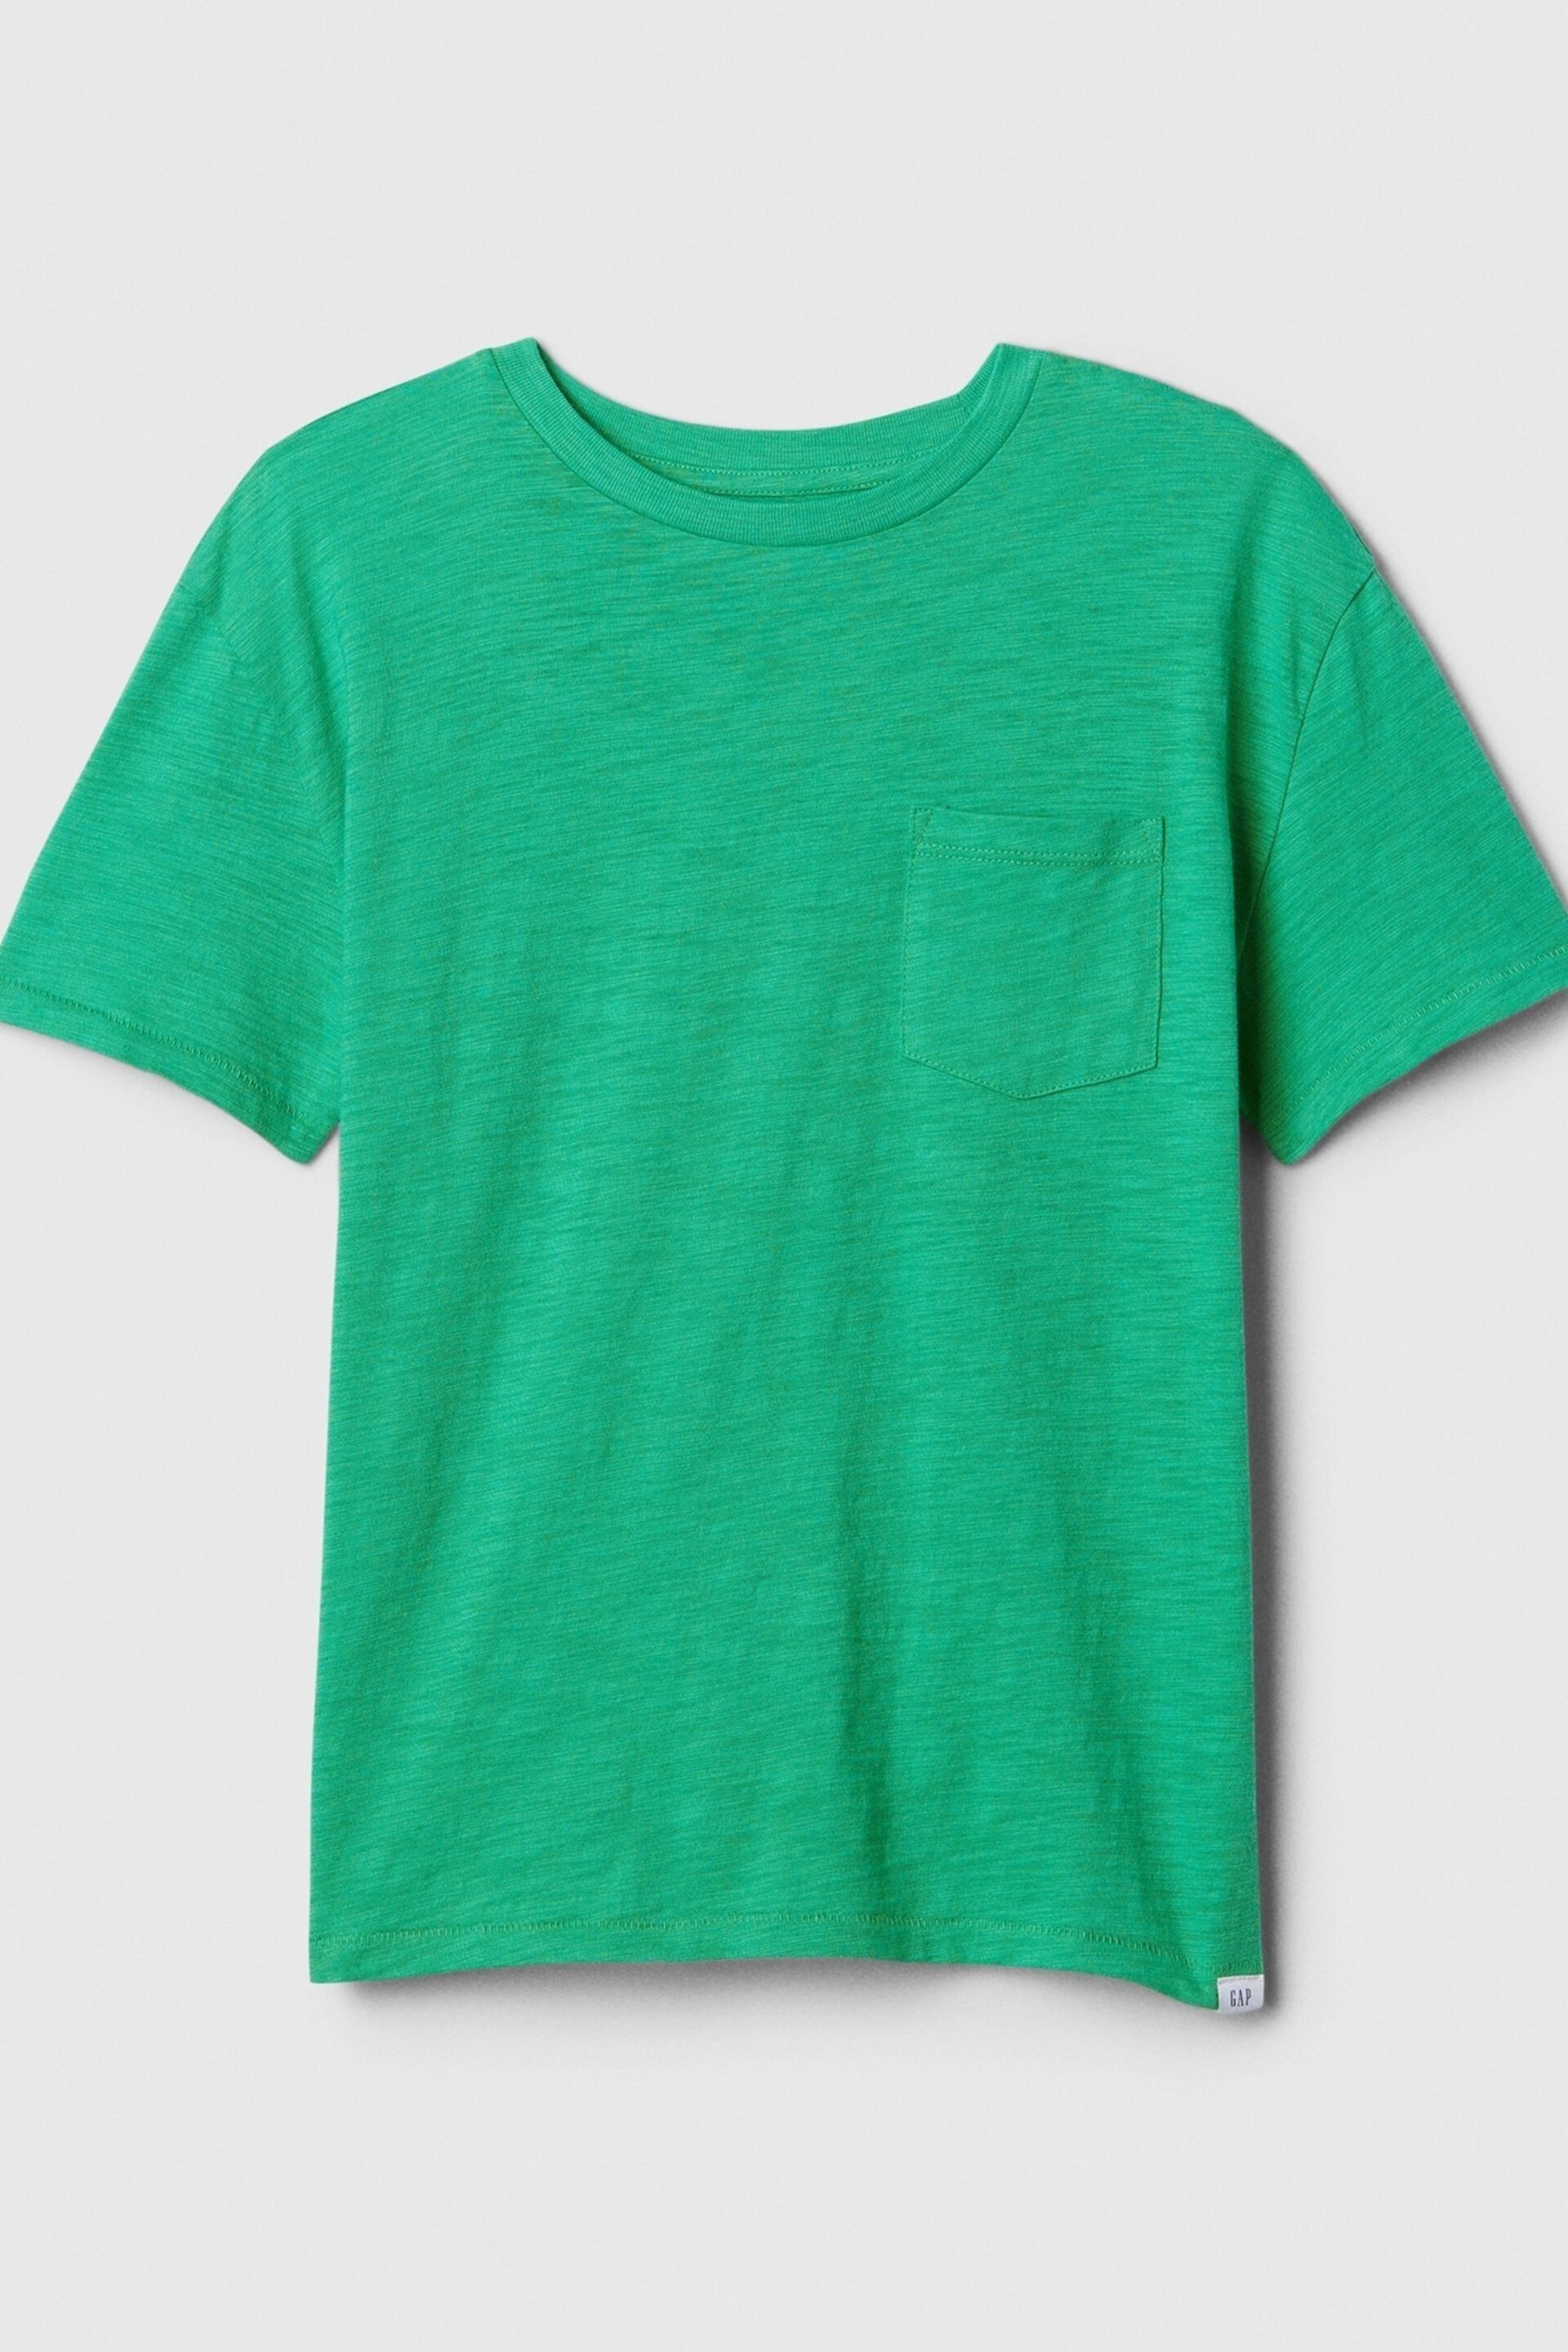 Gap Green Pocket Short Sleeve Crew Neck T-Shirt (4-13yrs) - Image 1 of 1